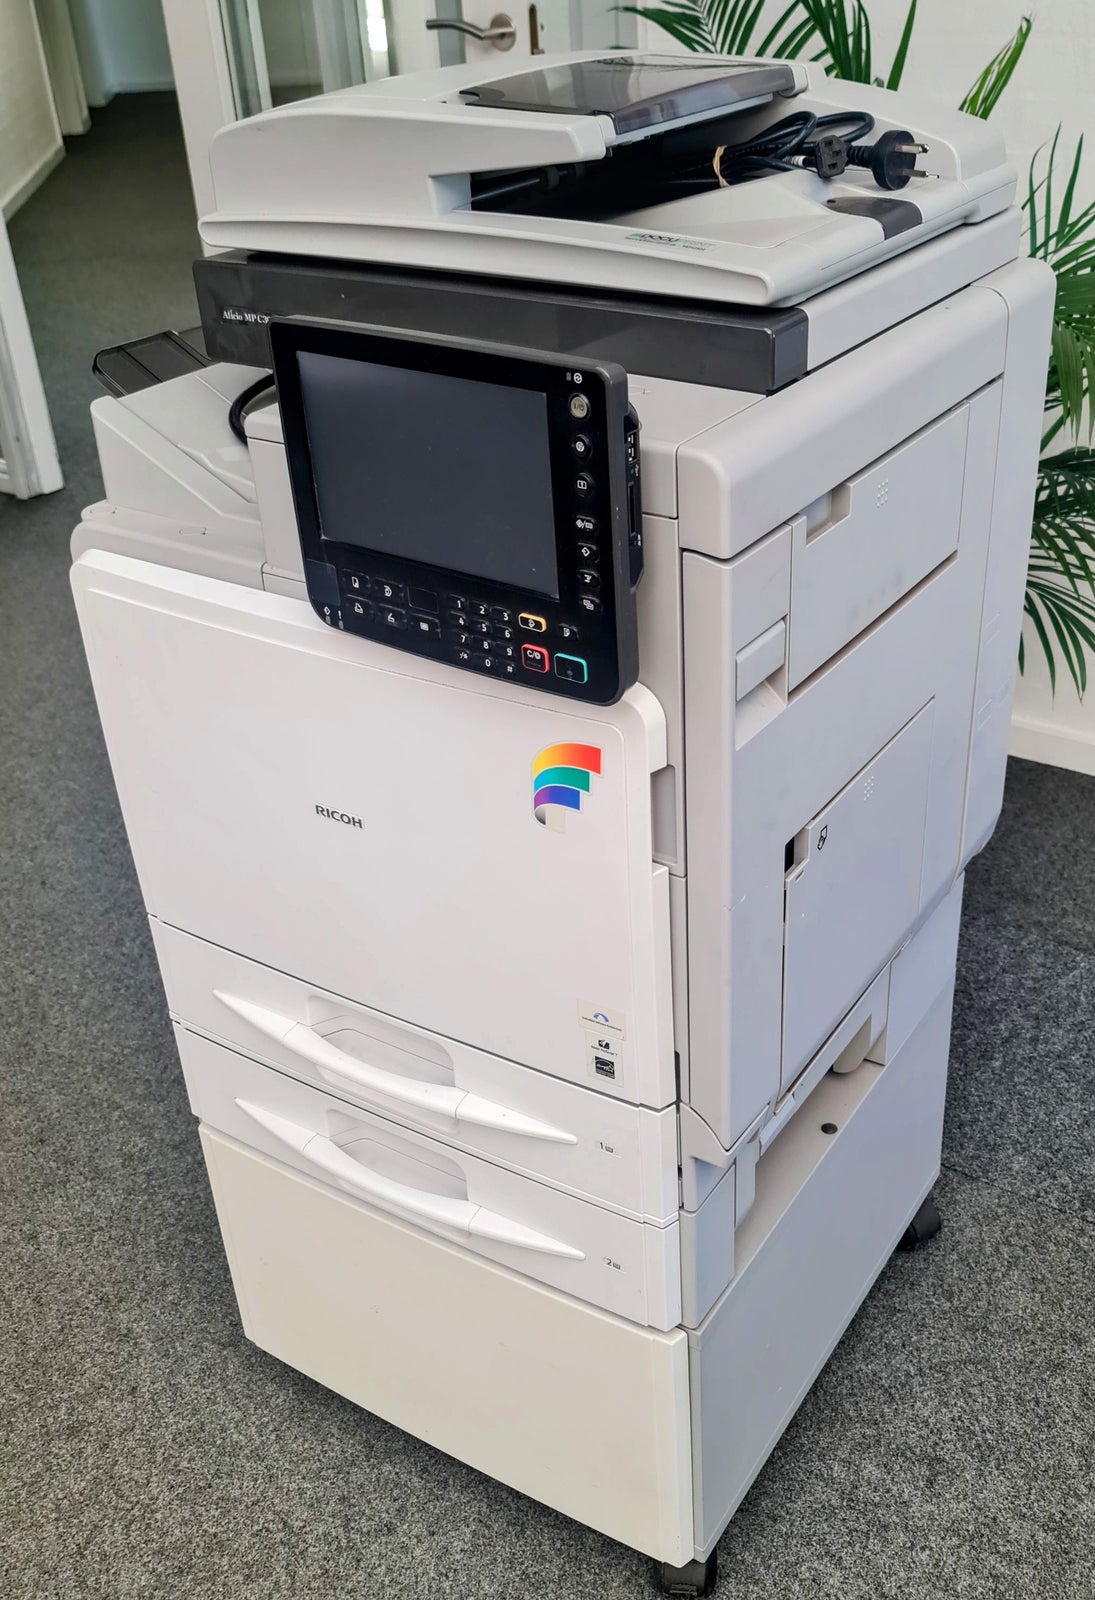 Printer/kopimaskine Ricoh MP C300 ny serviceret